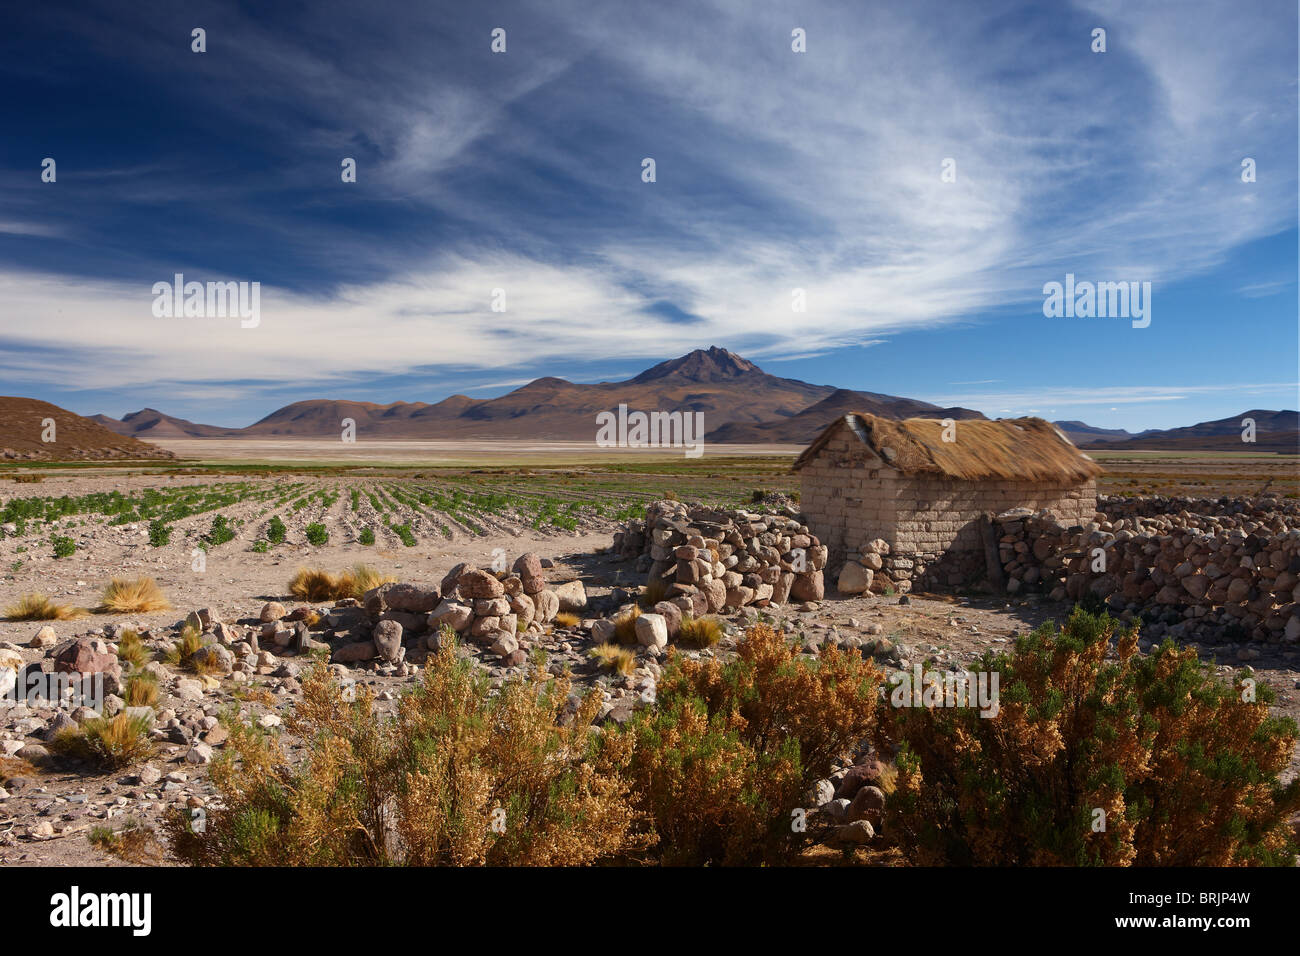 Vulcan Tupan & a campesino's house on the altiplano, Bolivia Stock Photo